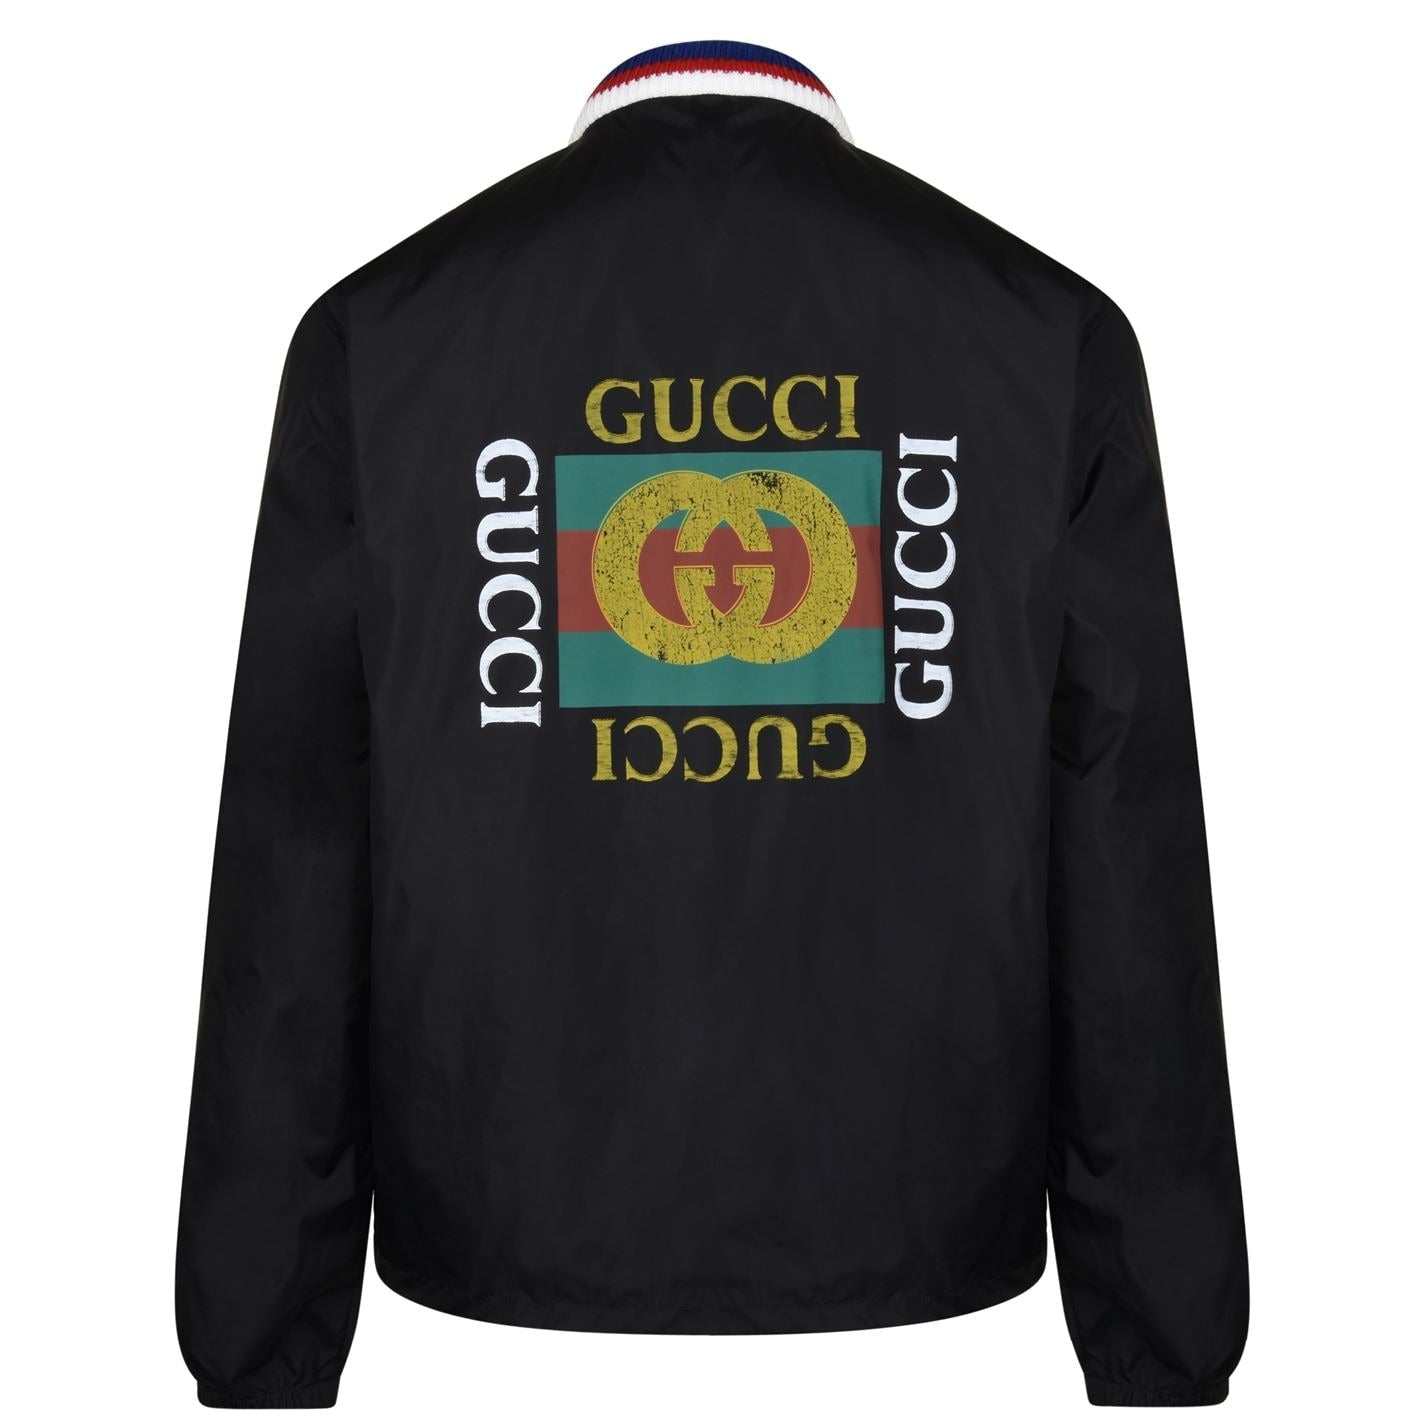 Gucci 'Coach' Logo Jacket Black - Boinclo ltd